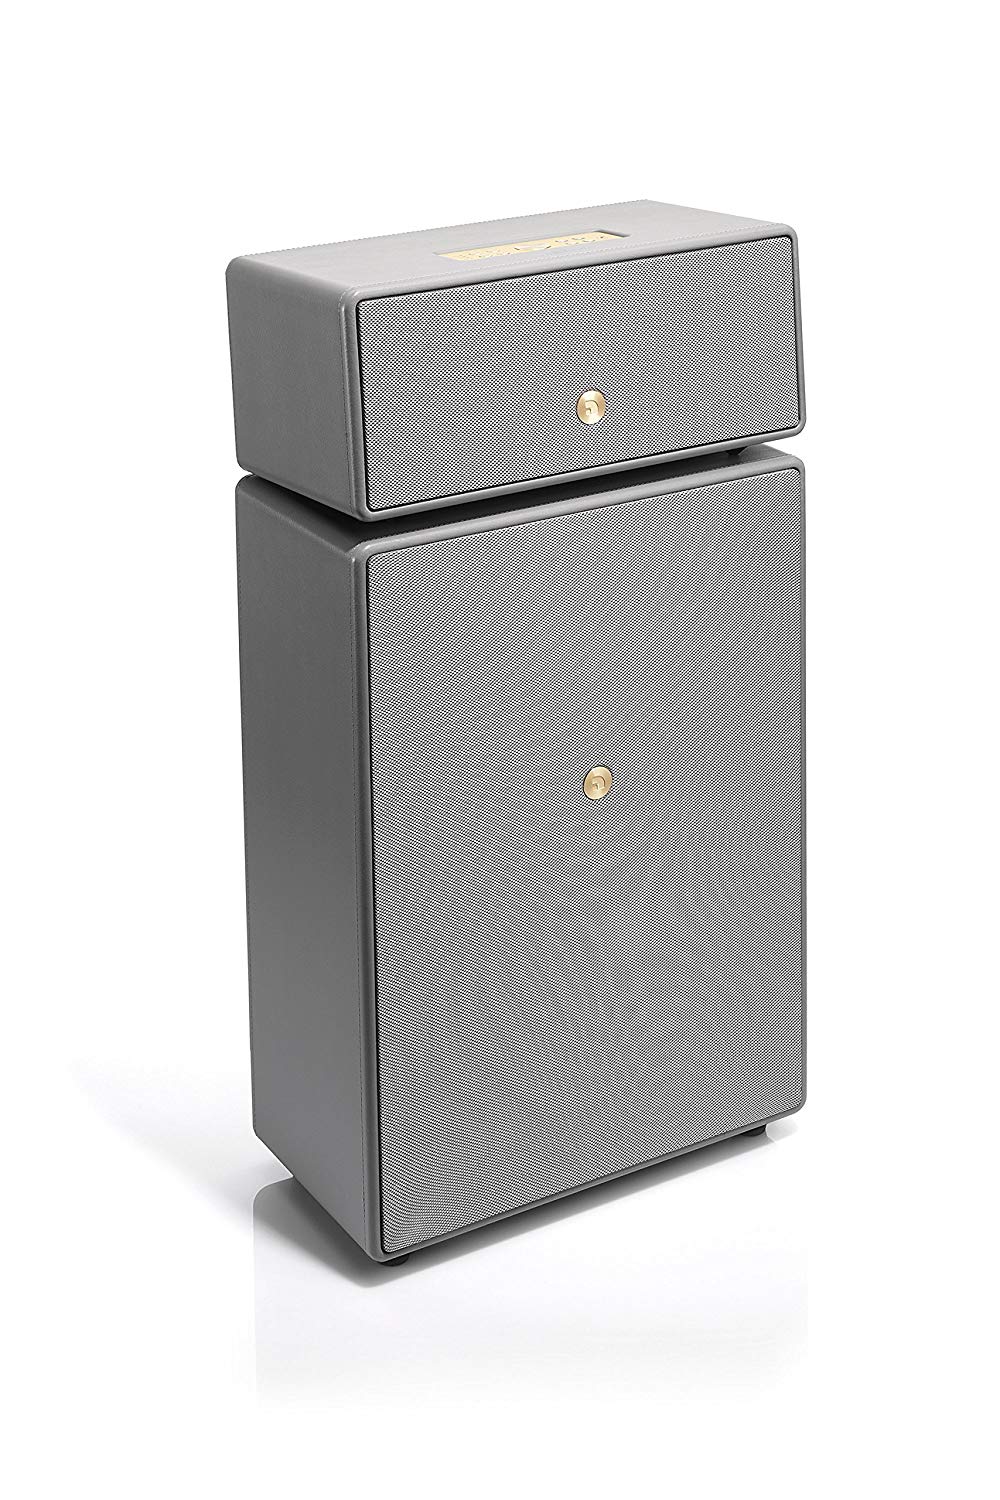 Audio Pro Drumfire Wireless Multiroom Speaker System